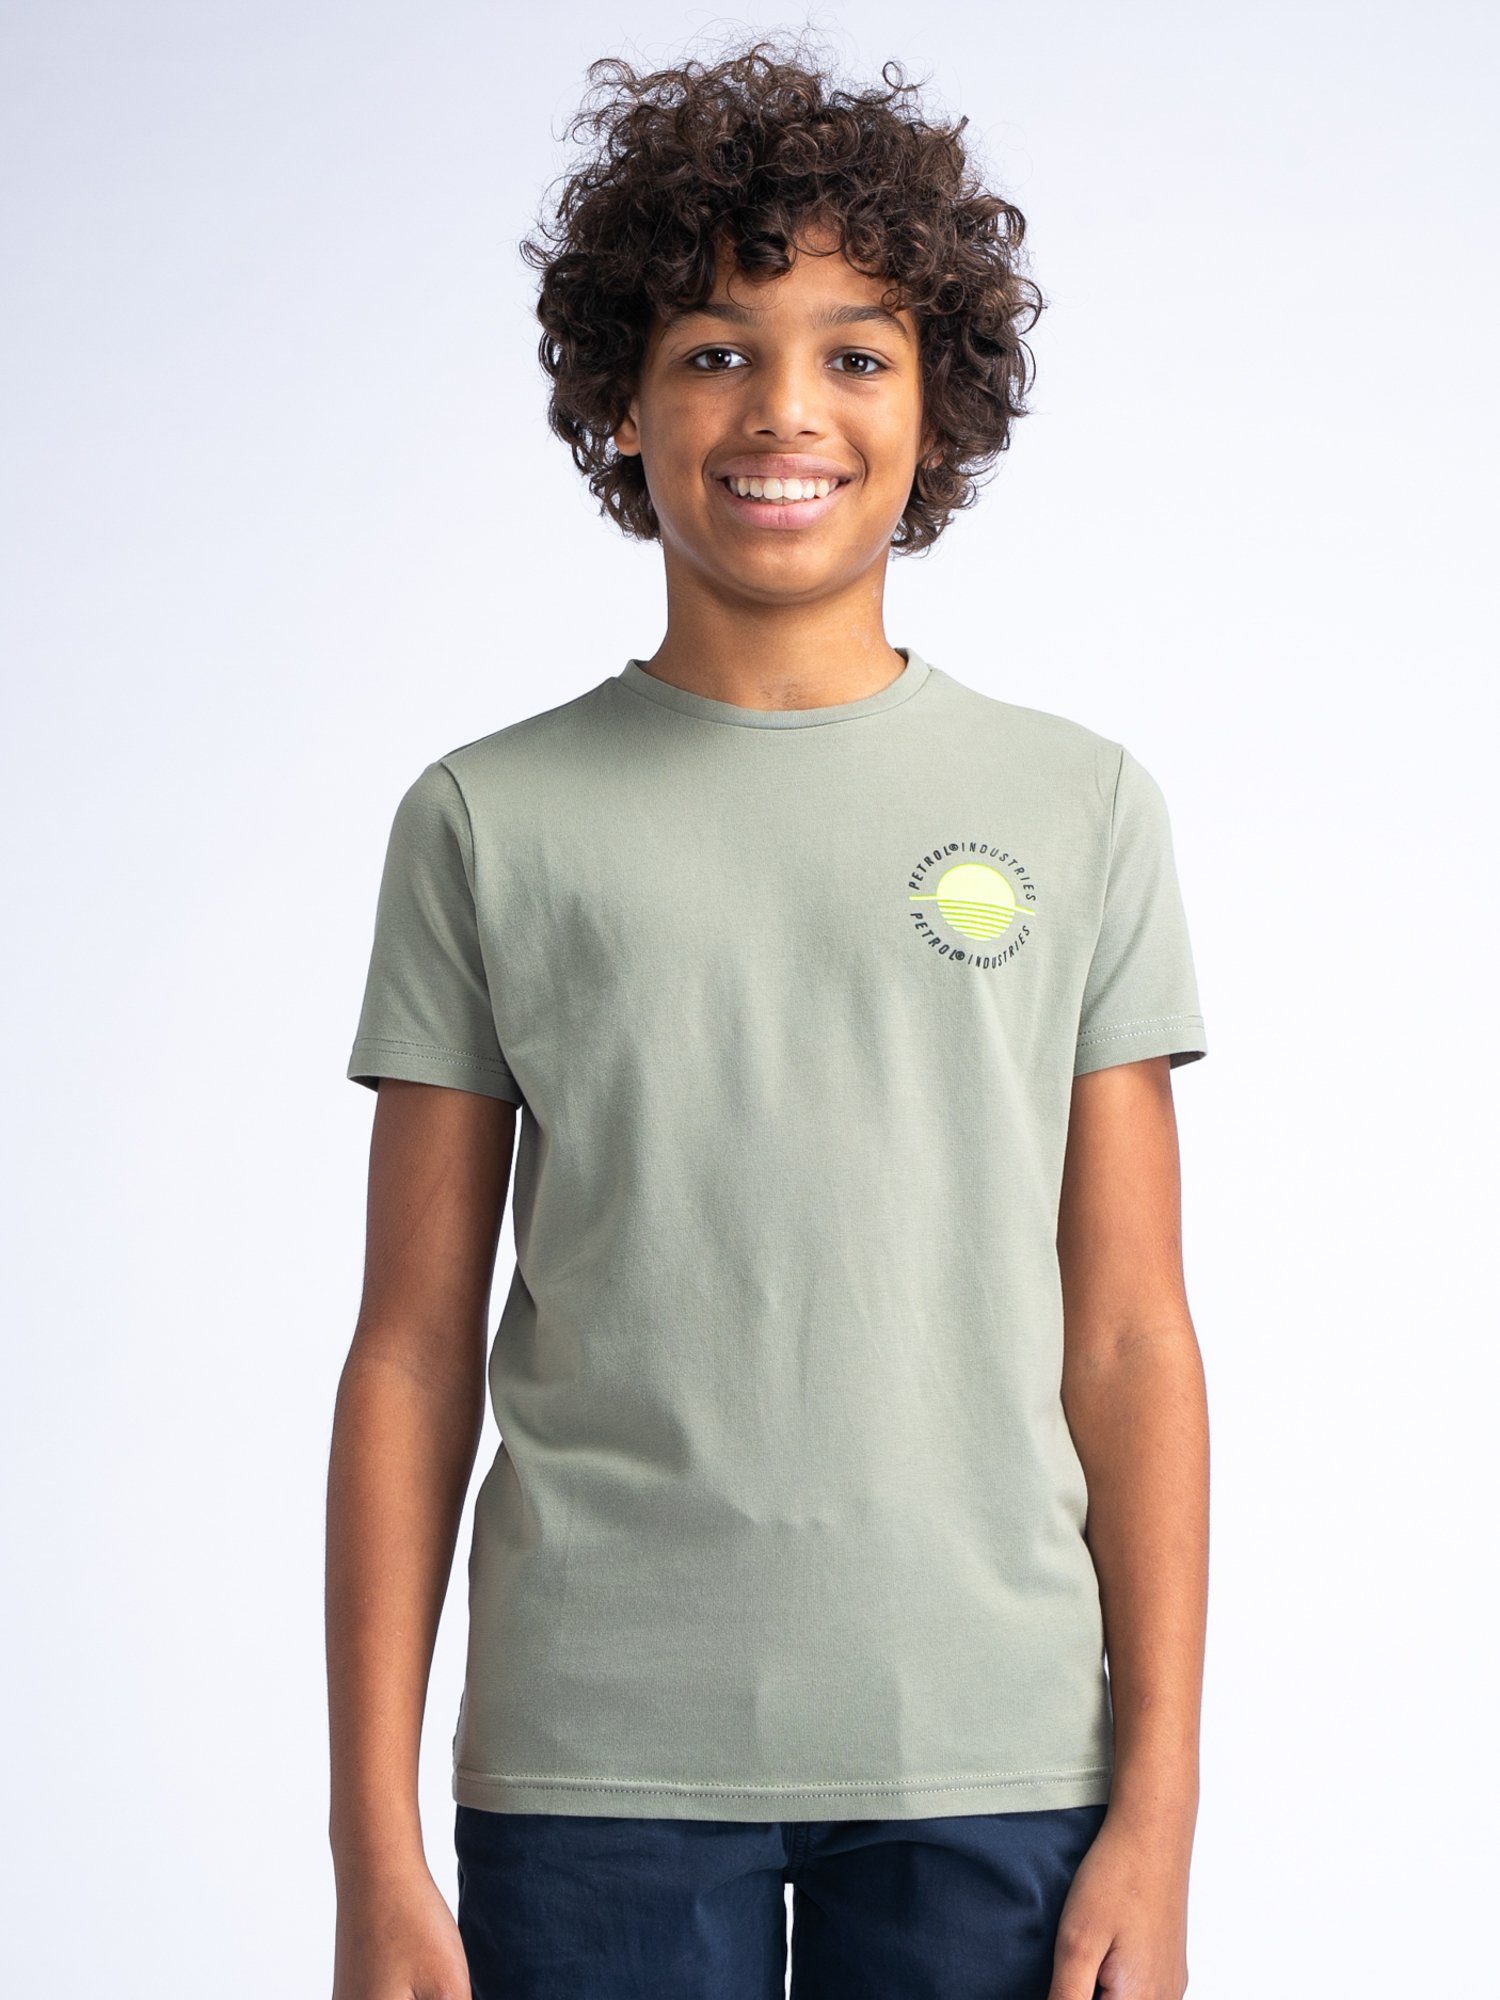 Petrol Industries T-shirt for boys